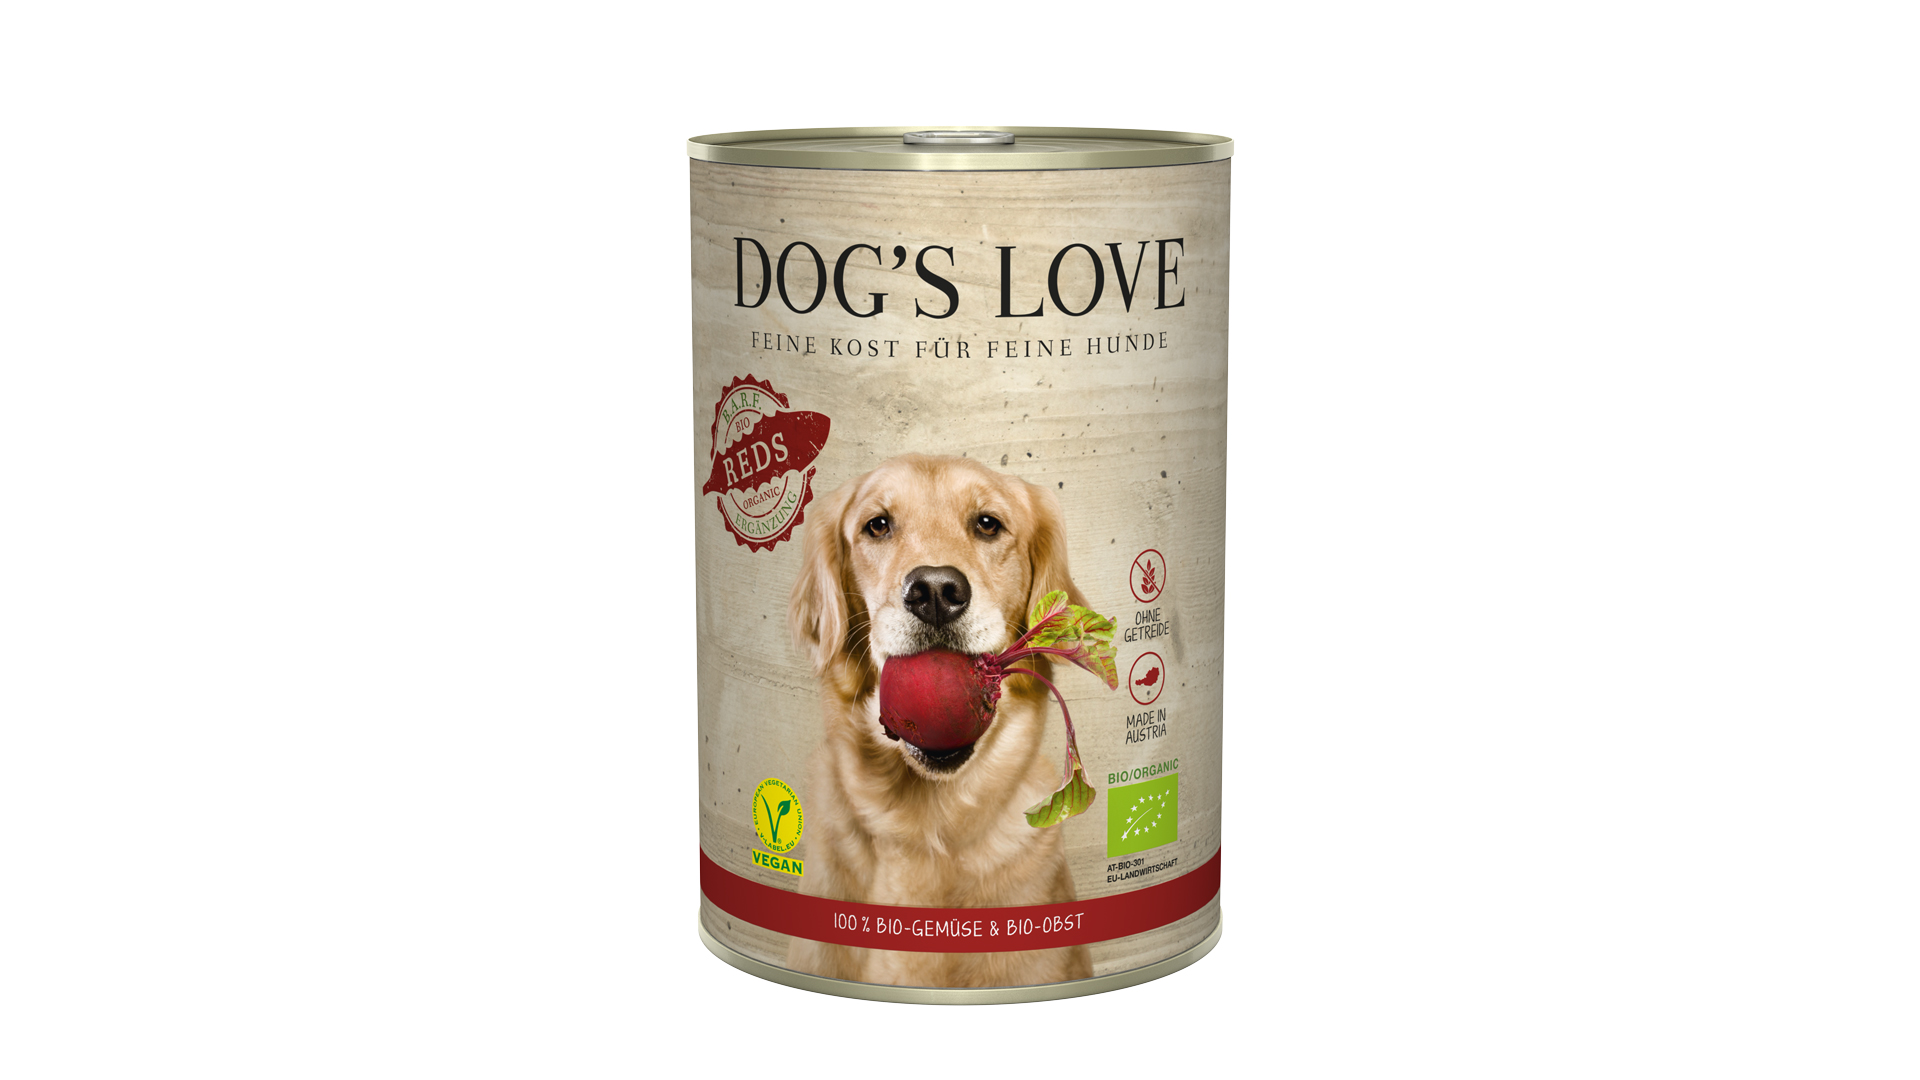 DOG'S LOVE BIO Reds Vegan 400g